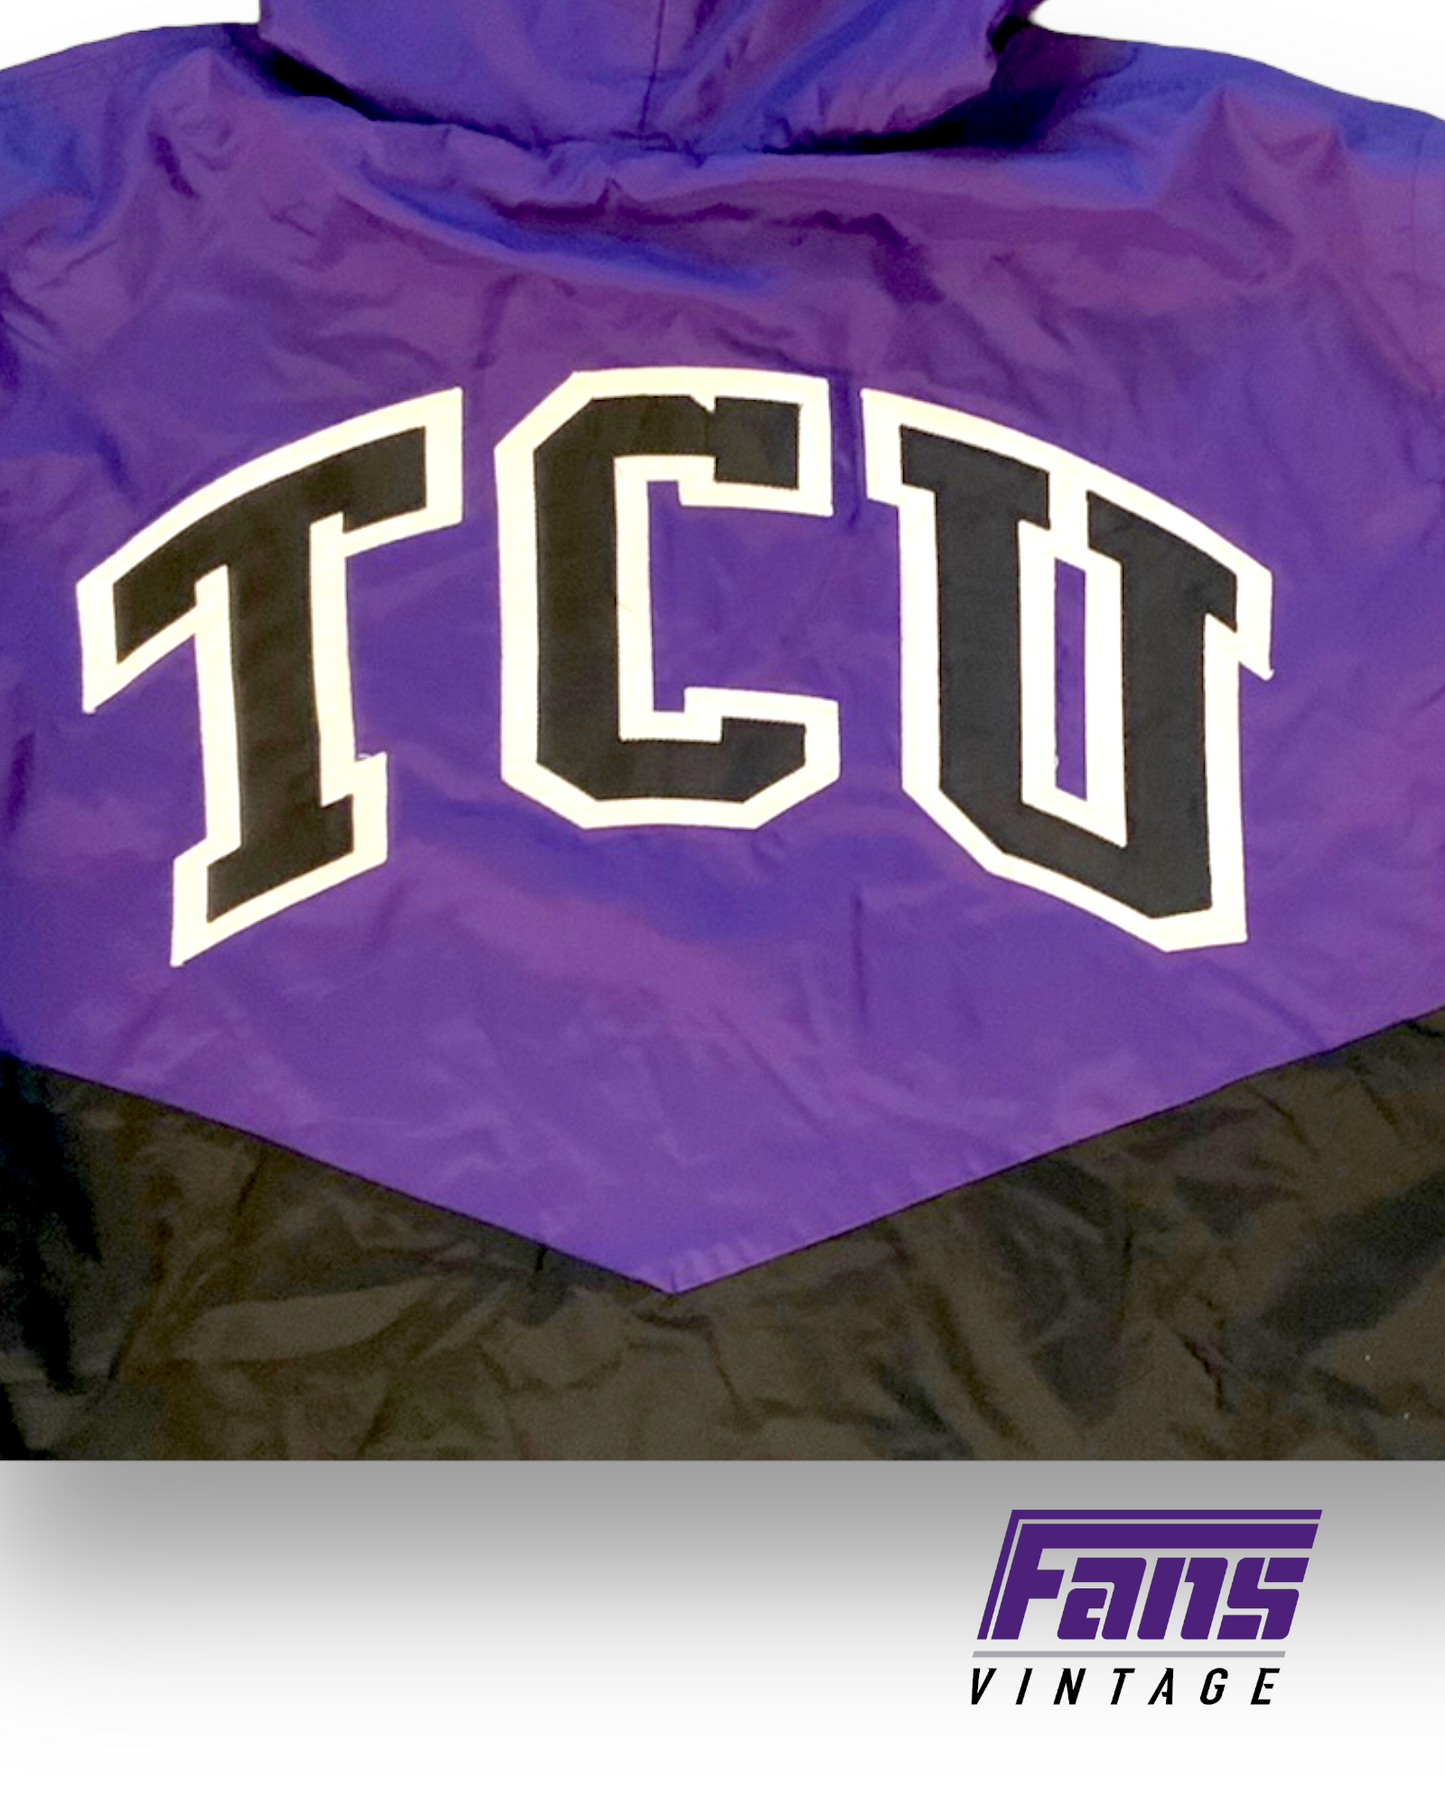 Team-Issue Vintage TCU Jacket - Swimming & Diving Fleece Lined Full Length Parka